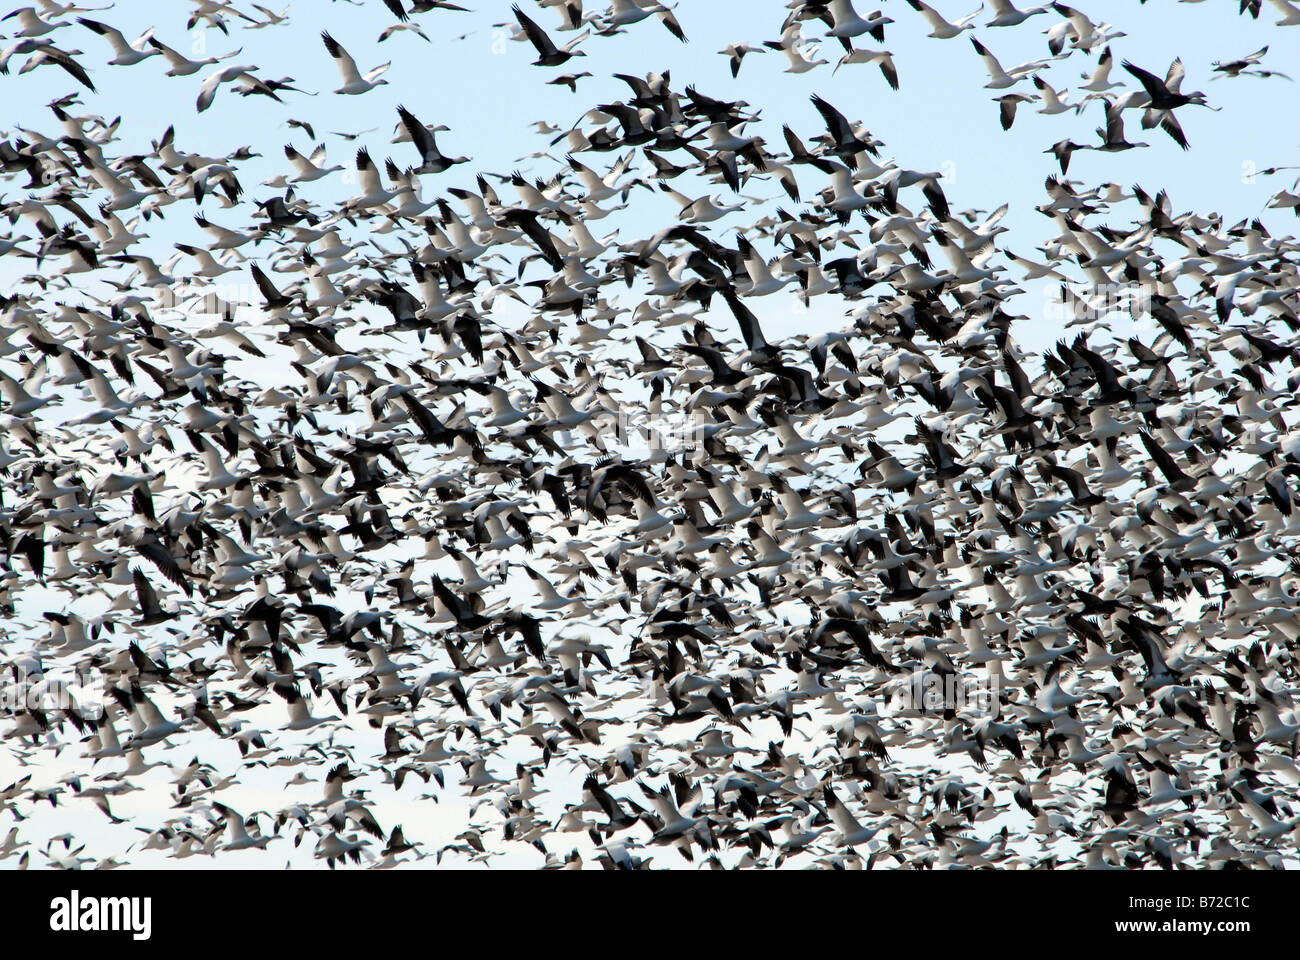 Schneegänse (Anser Caerulescens Caerulescens) Herde im Flug Stockfoto